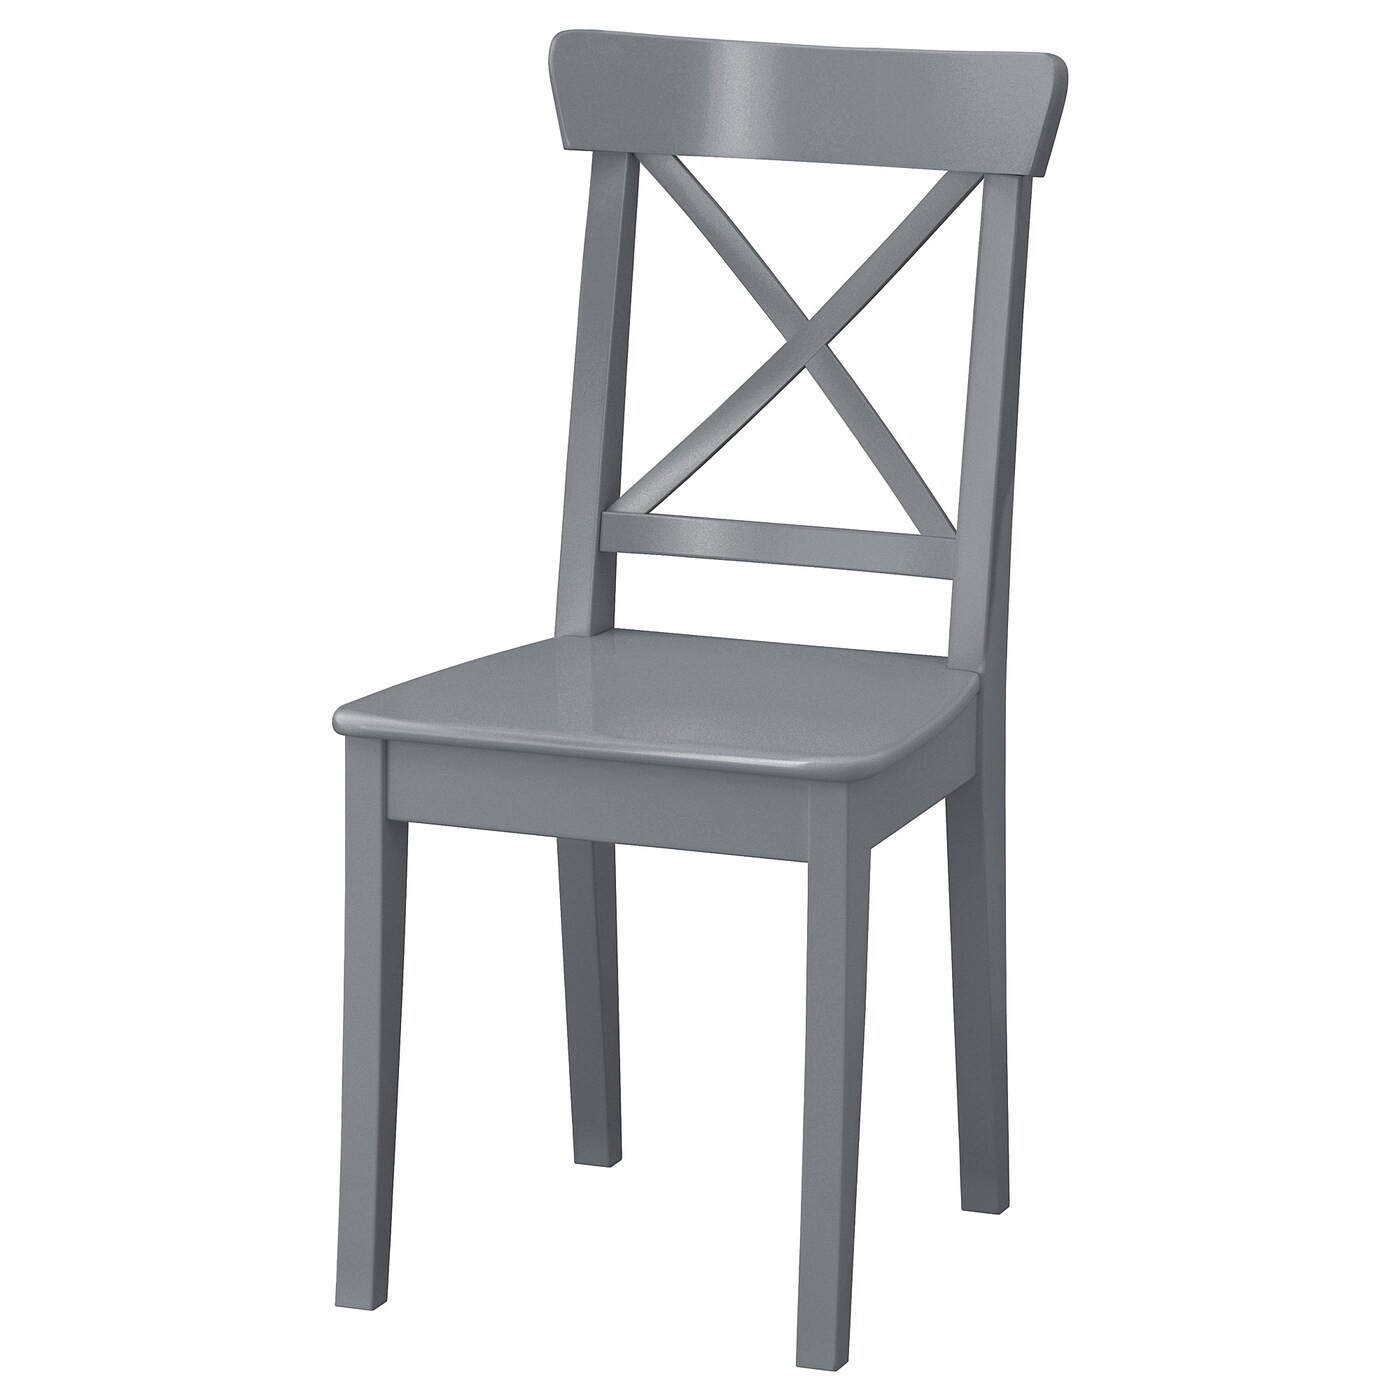 INGOLF Chair